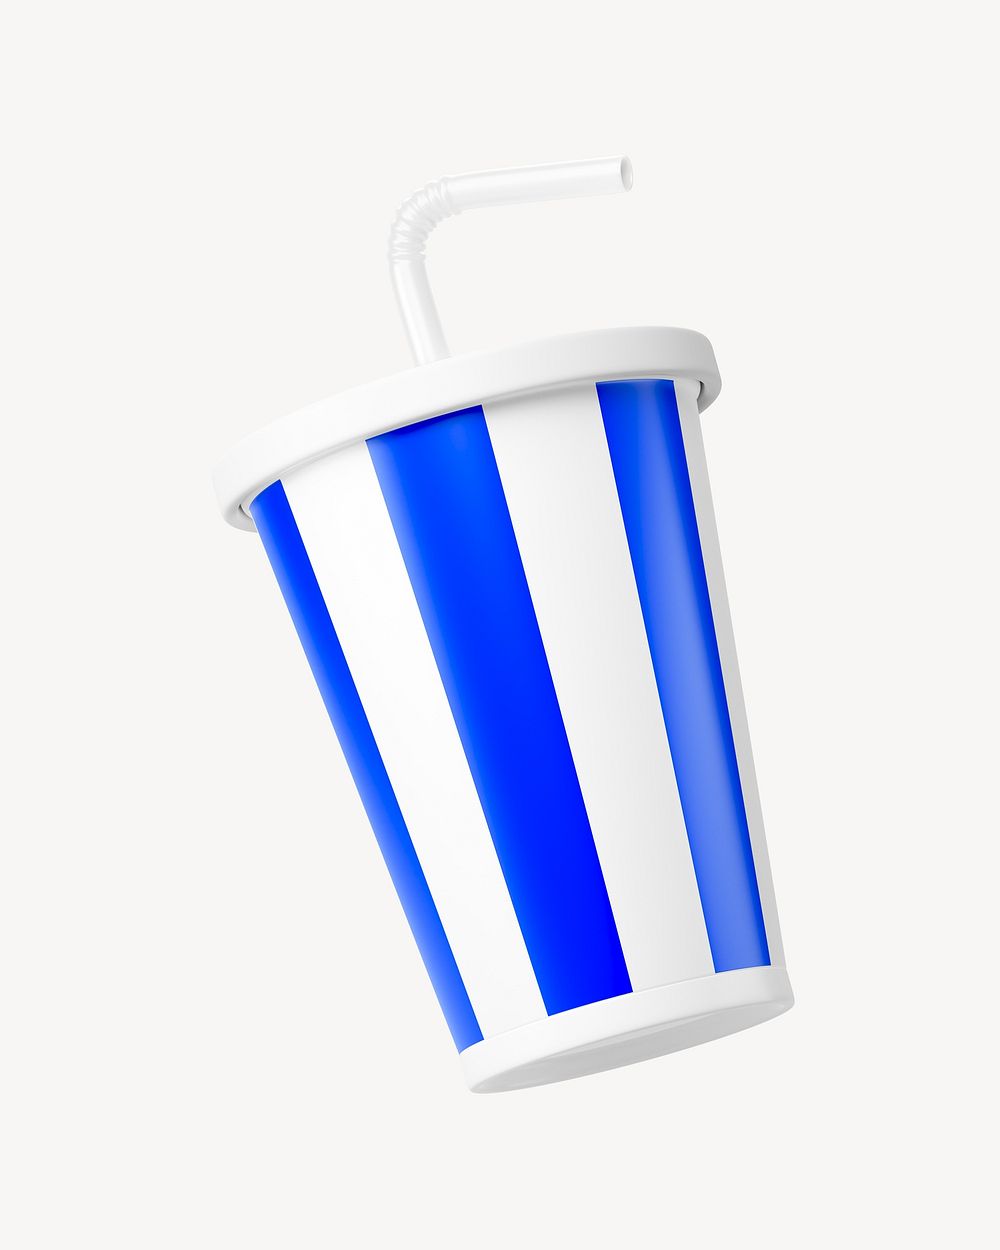 3D soda cup, element illustration